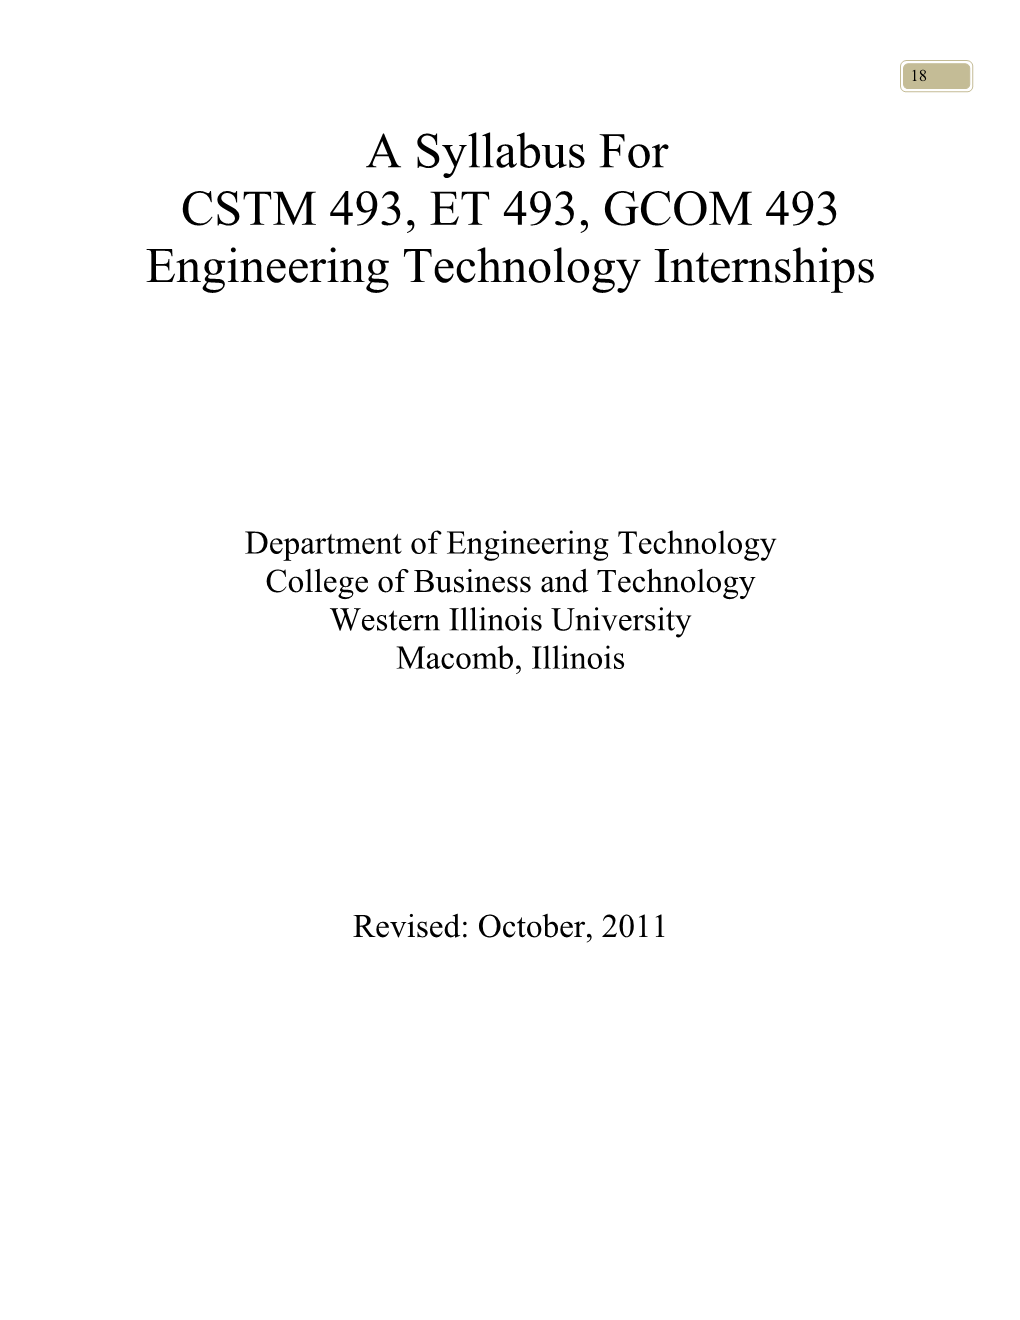 CSTM 493, ET 493, GCOM 493 Engineering Technology Internships